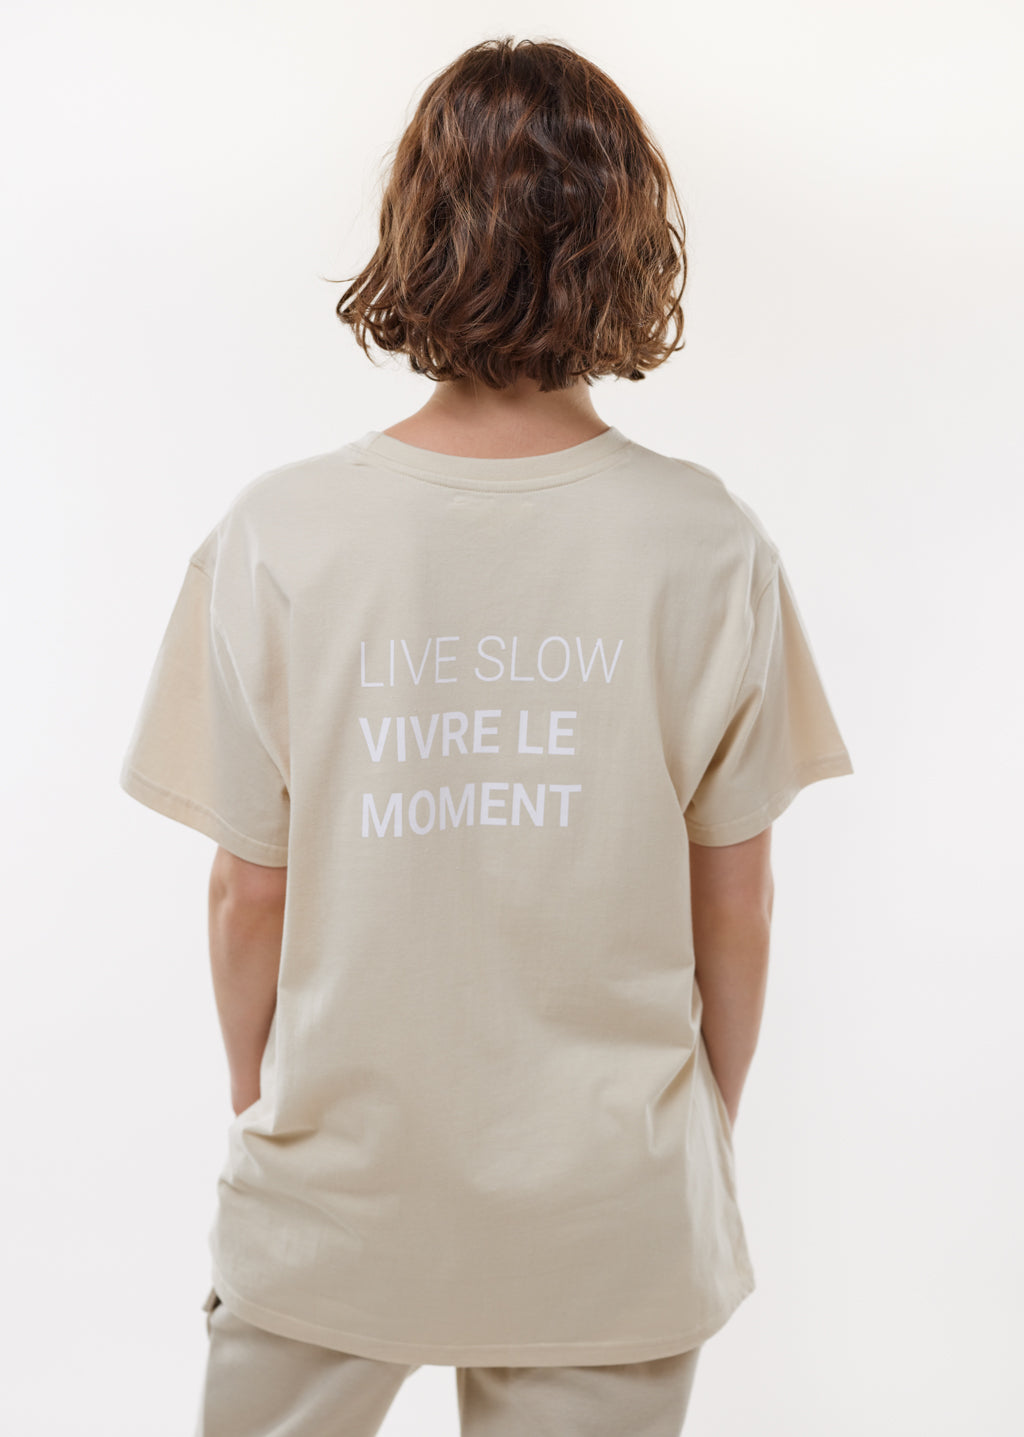 T-shirt promotionnel LIVOM